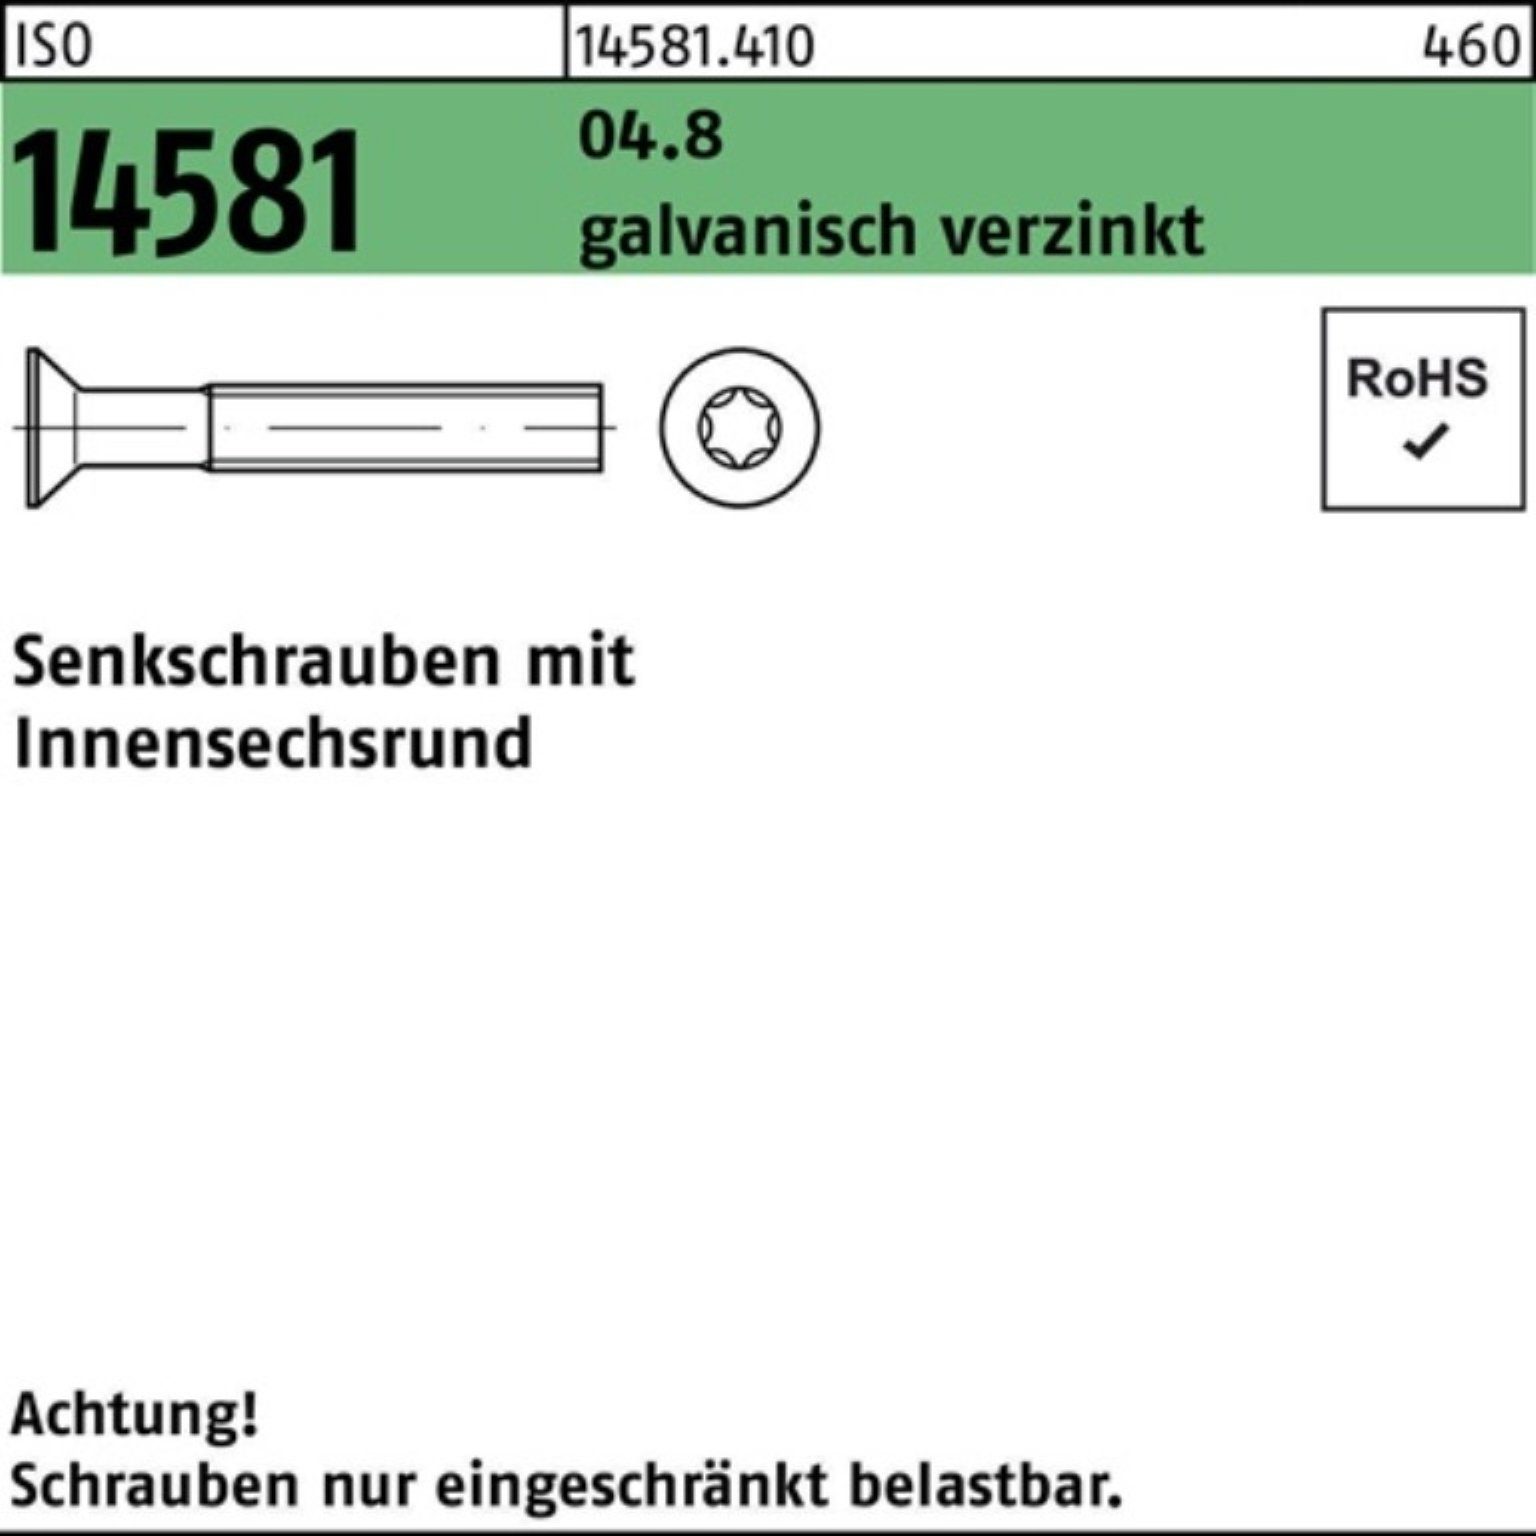 kaufe jetzt! Reyher Senkschraube 04.8 1000S 1000er Senkschraube Pack 14581 galv.verz. ISR ISO T25 M5x30